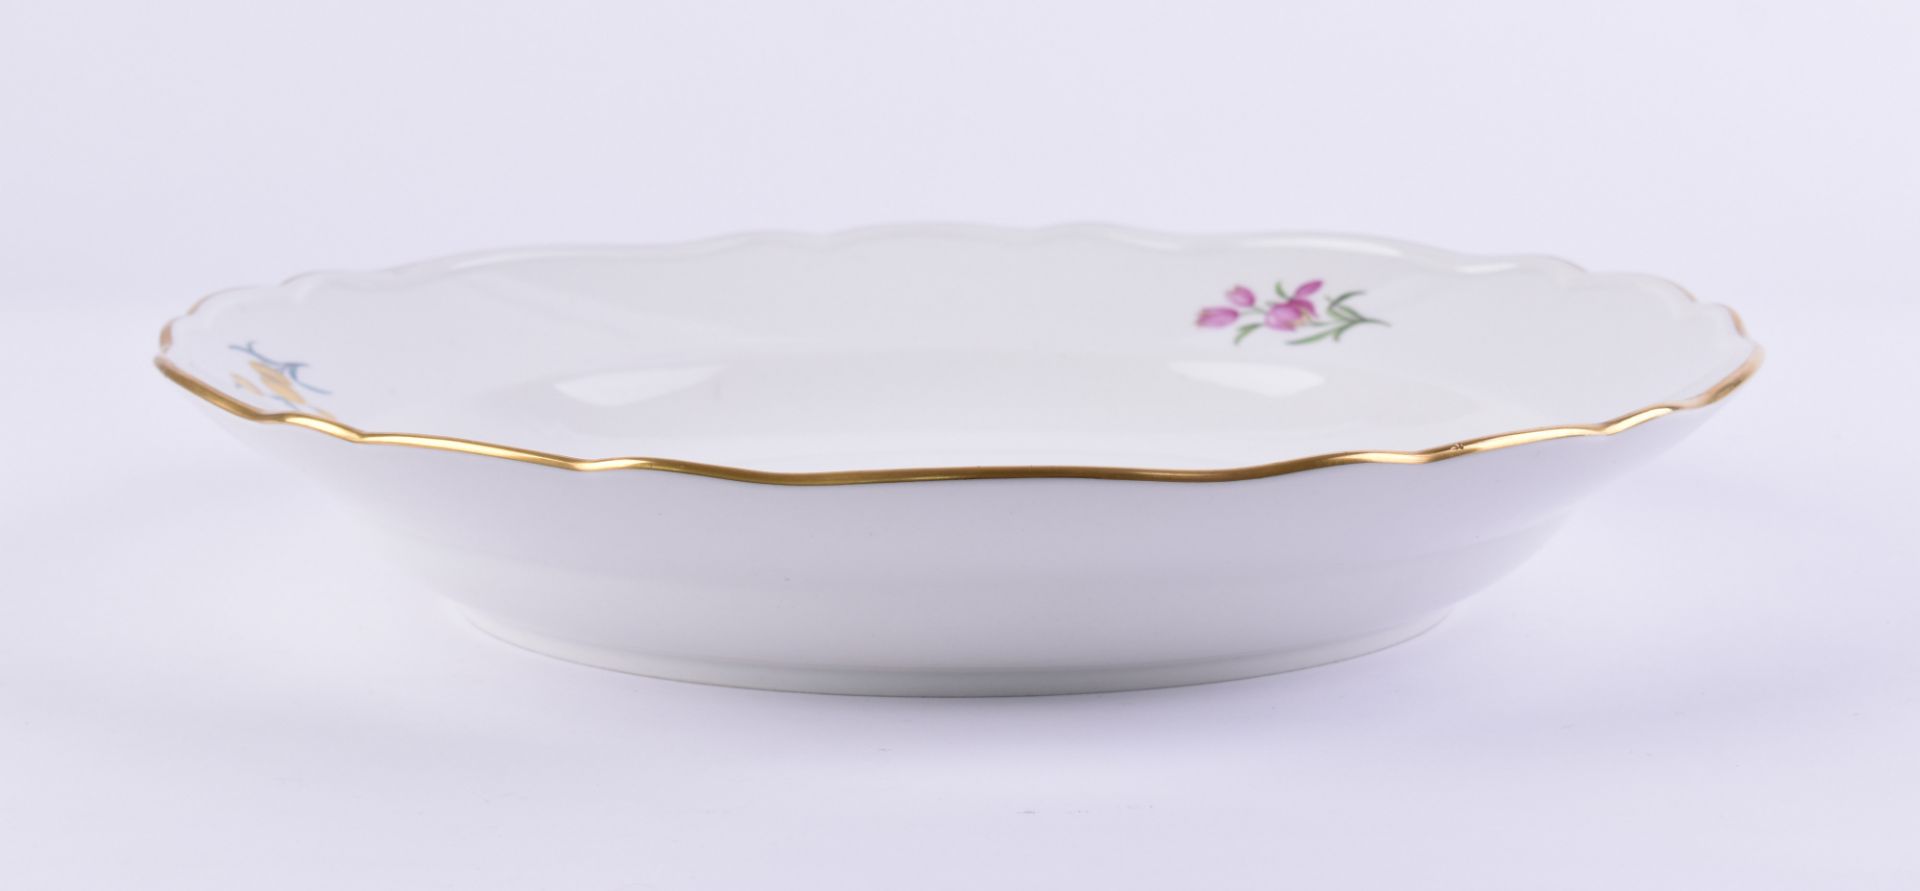  Serving bowl Meissen - Image 3 of 4